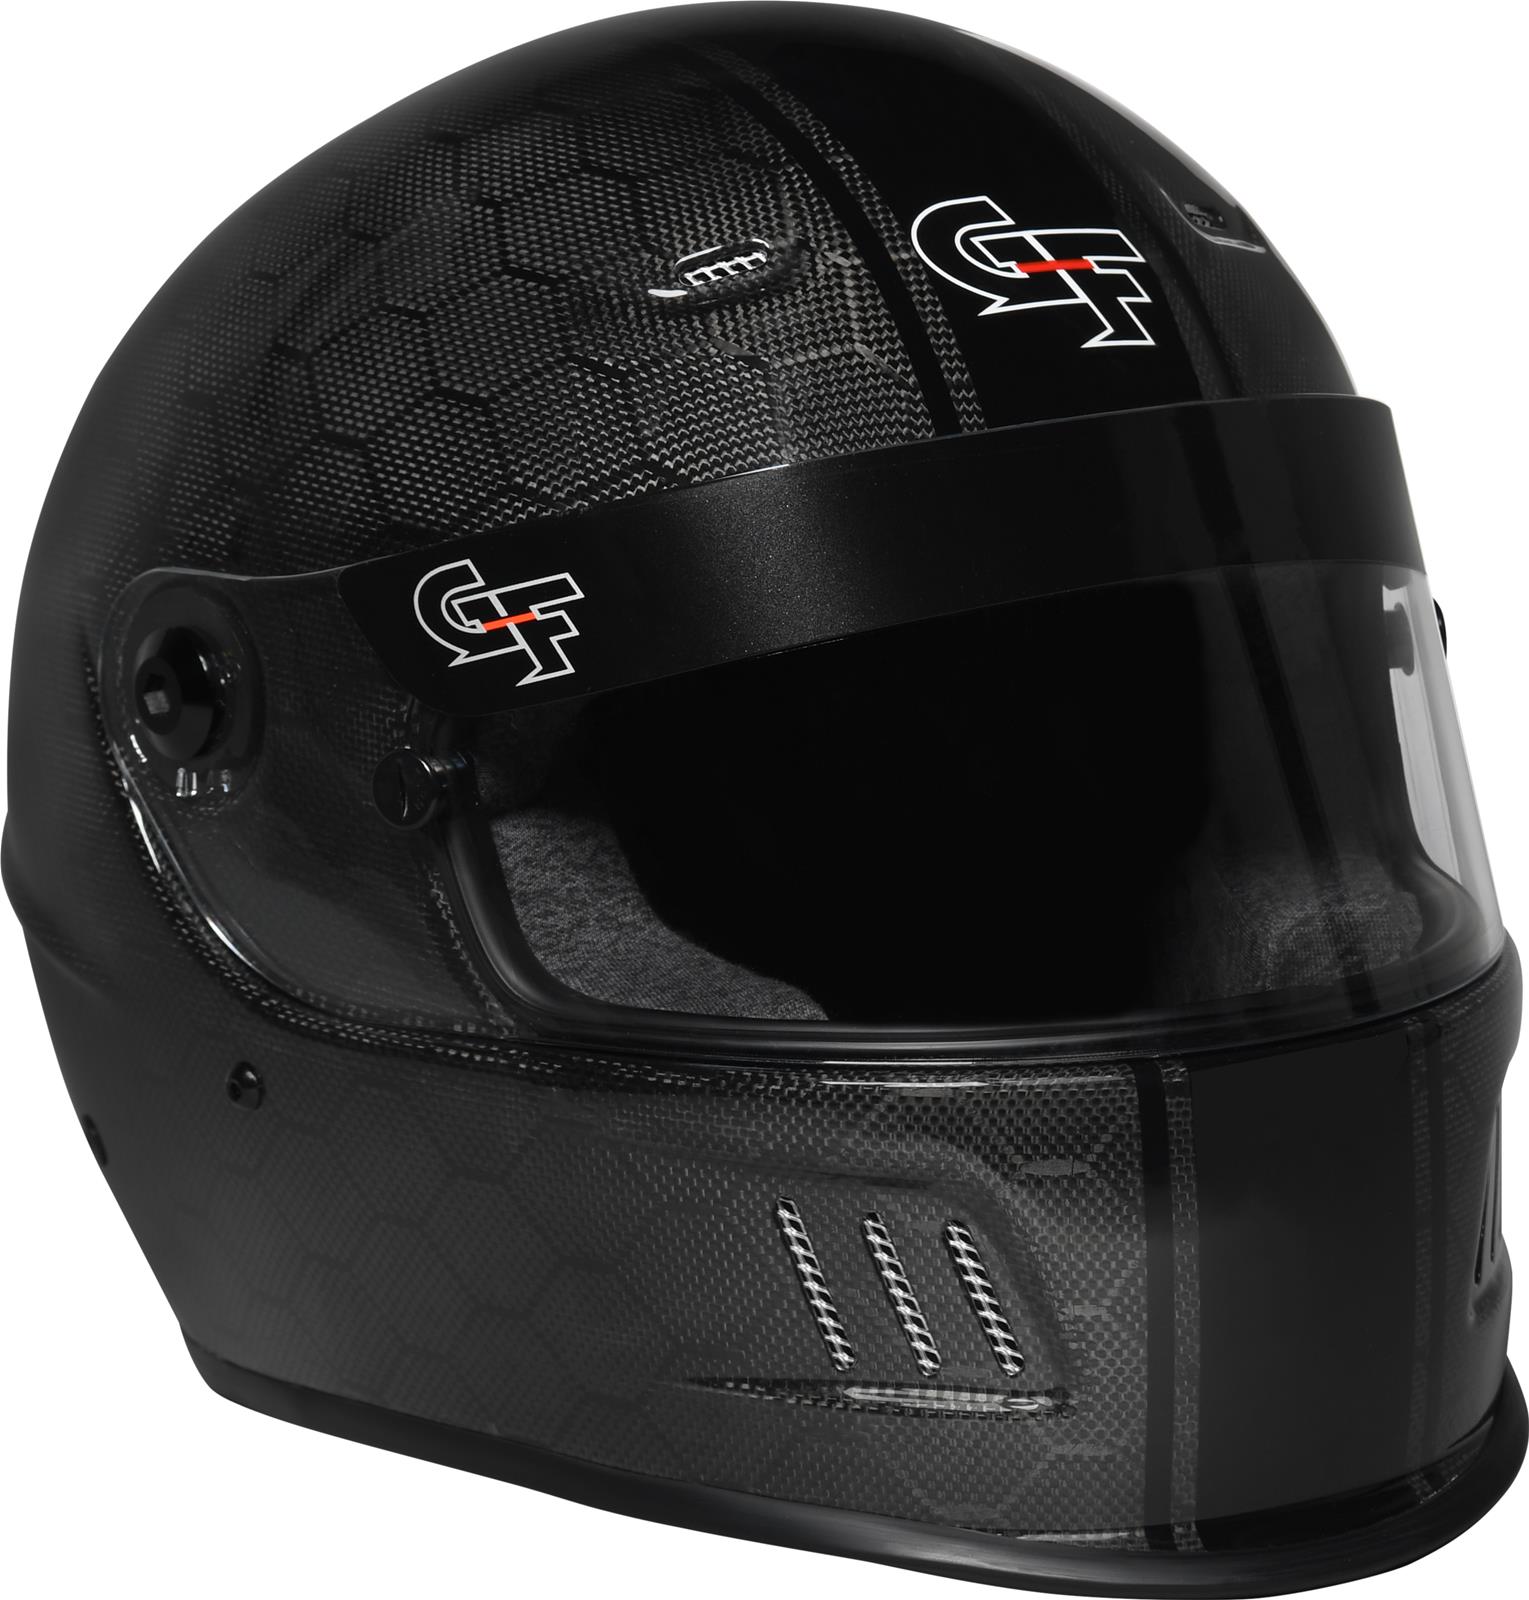 g force helmets